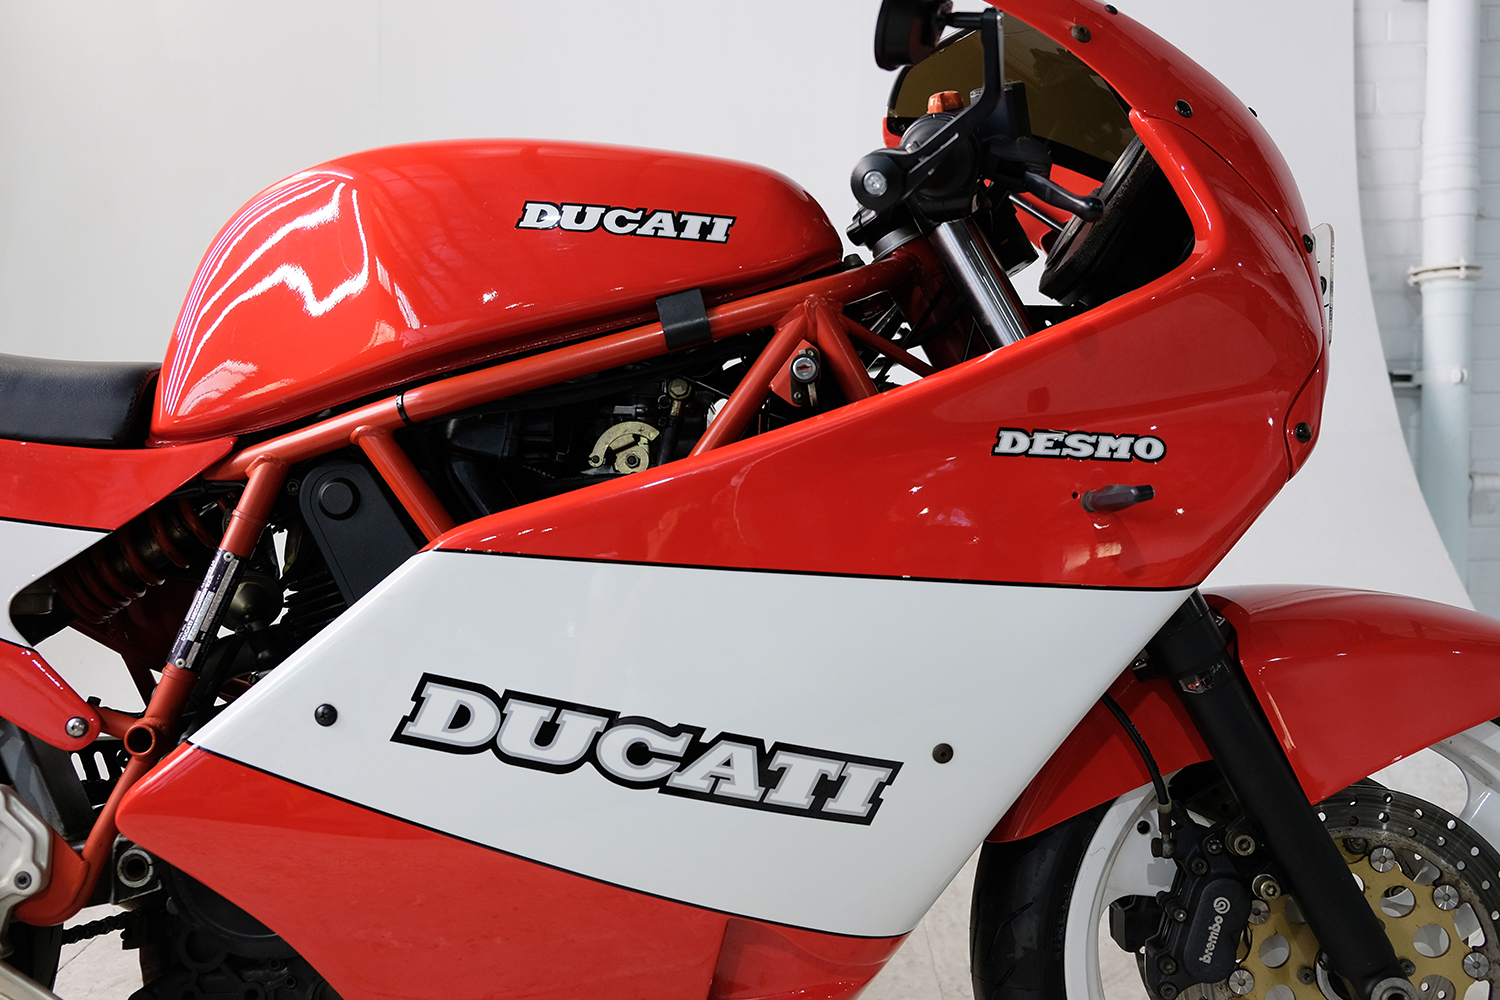 Ducati Desmo_0012_DSCF1487.jpg